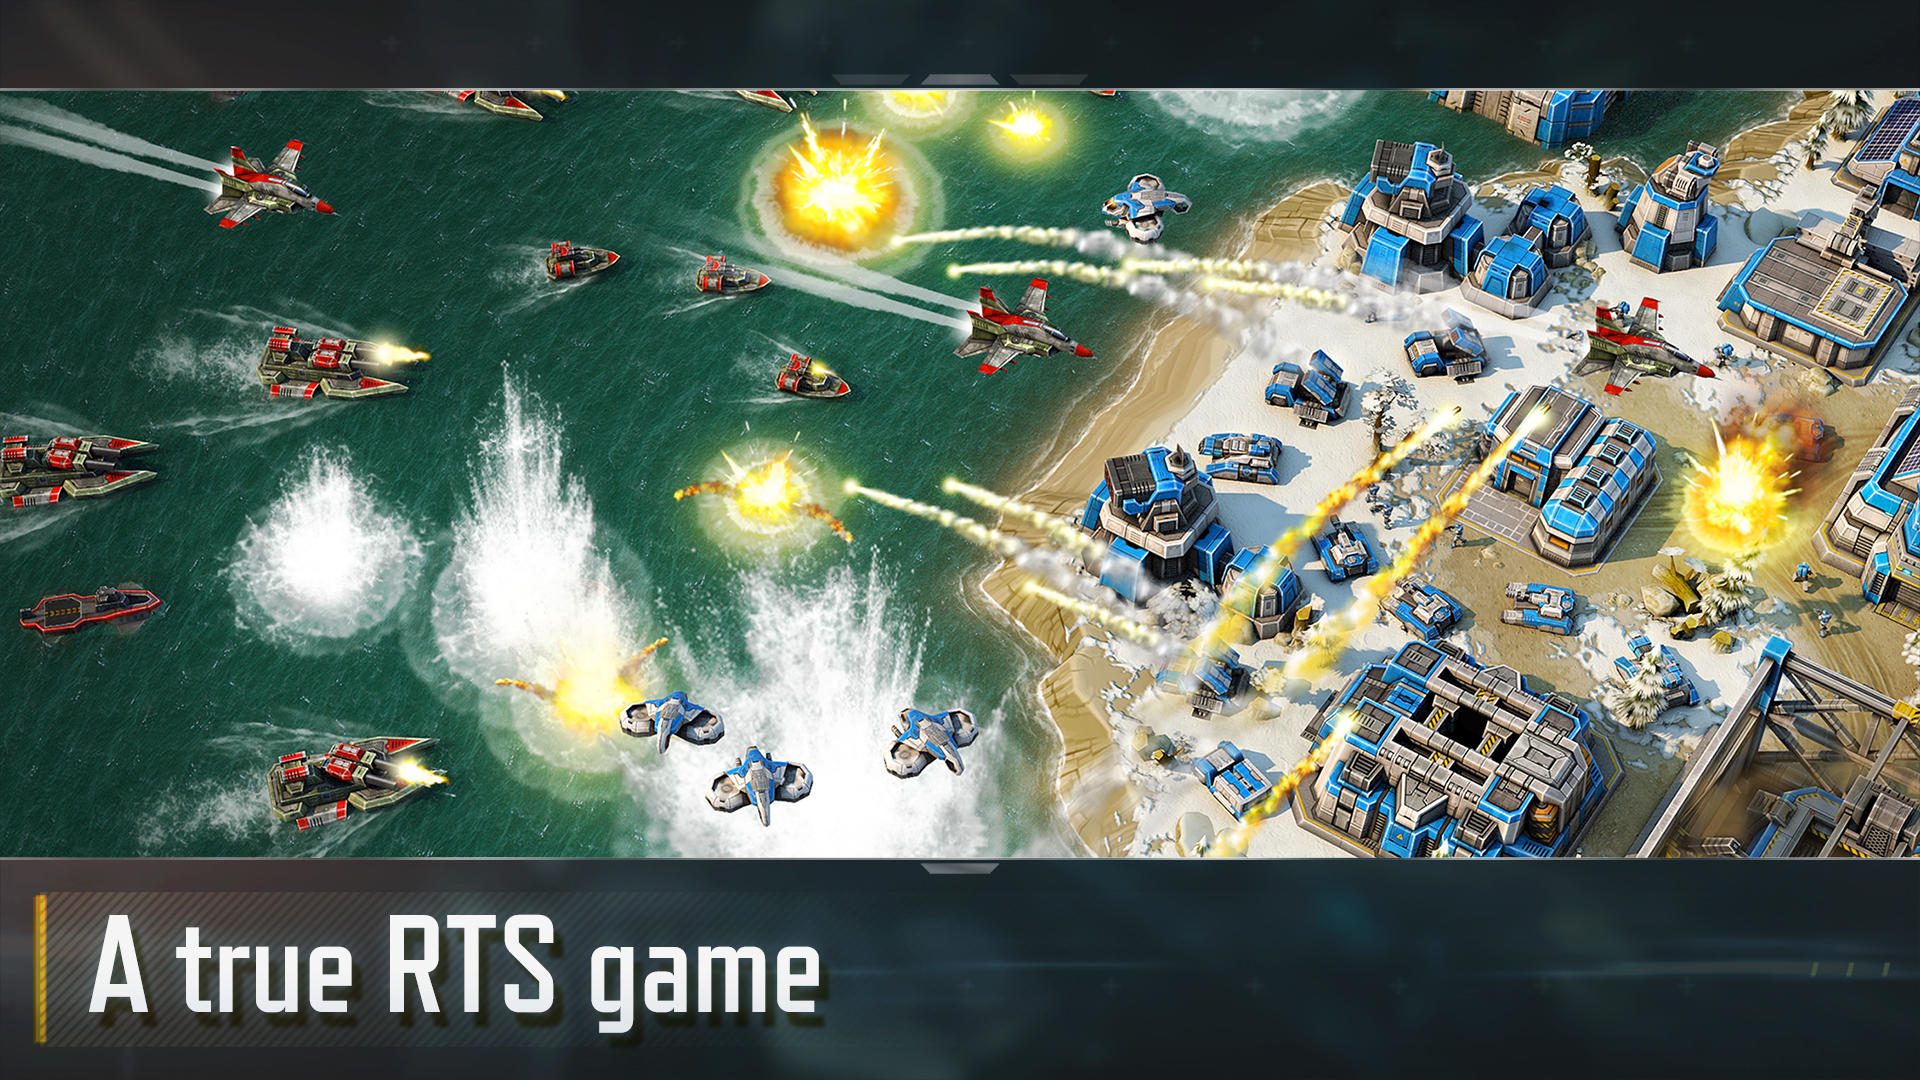 Screenshot 1 of Art of War 3: PvP RTS strategy game modern warfare 4.4.10